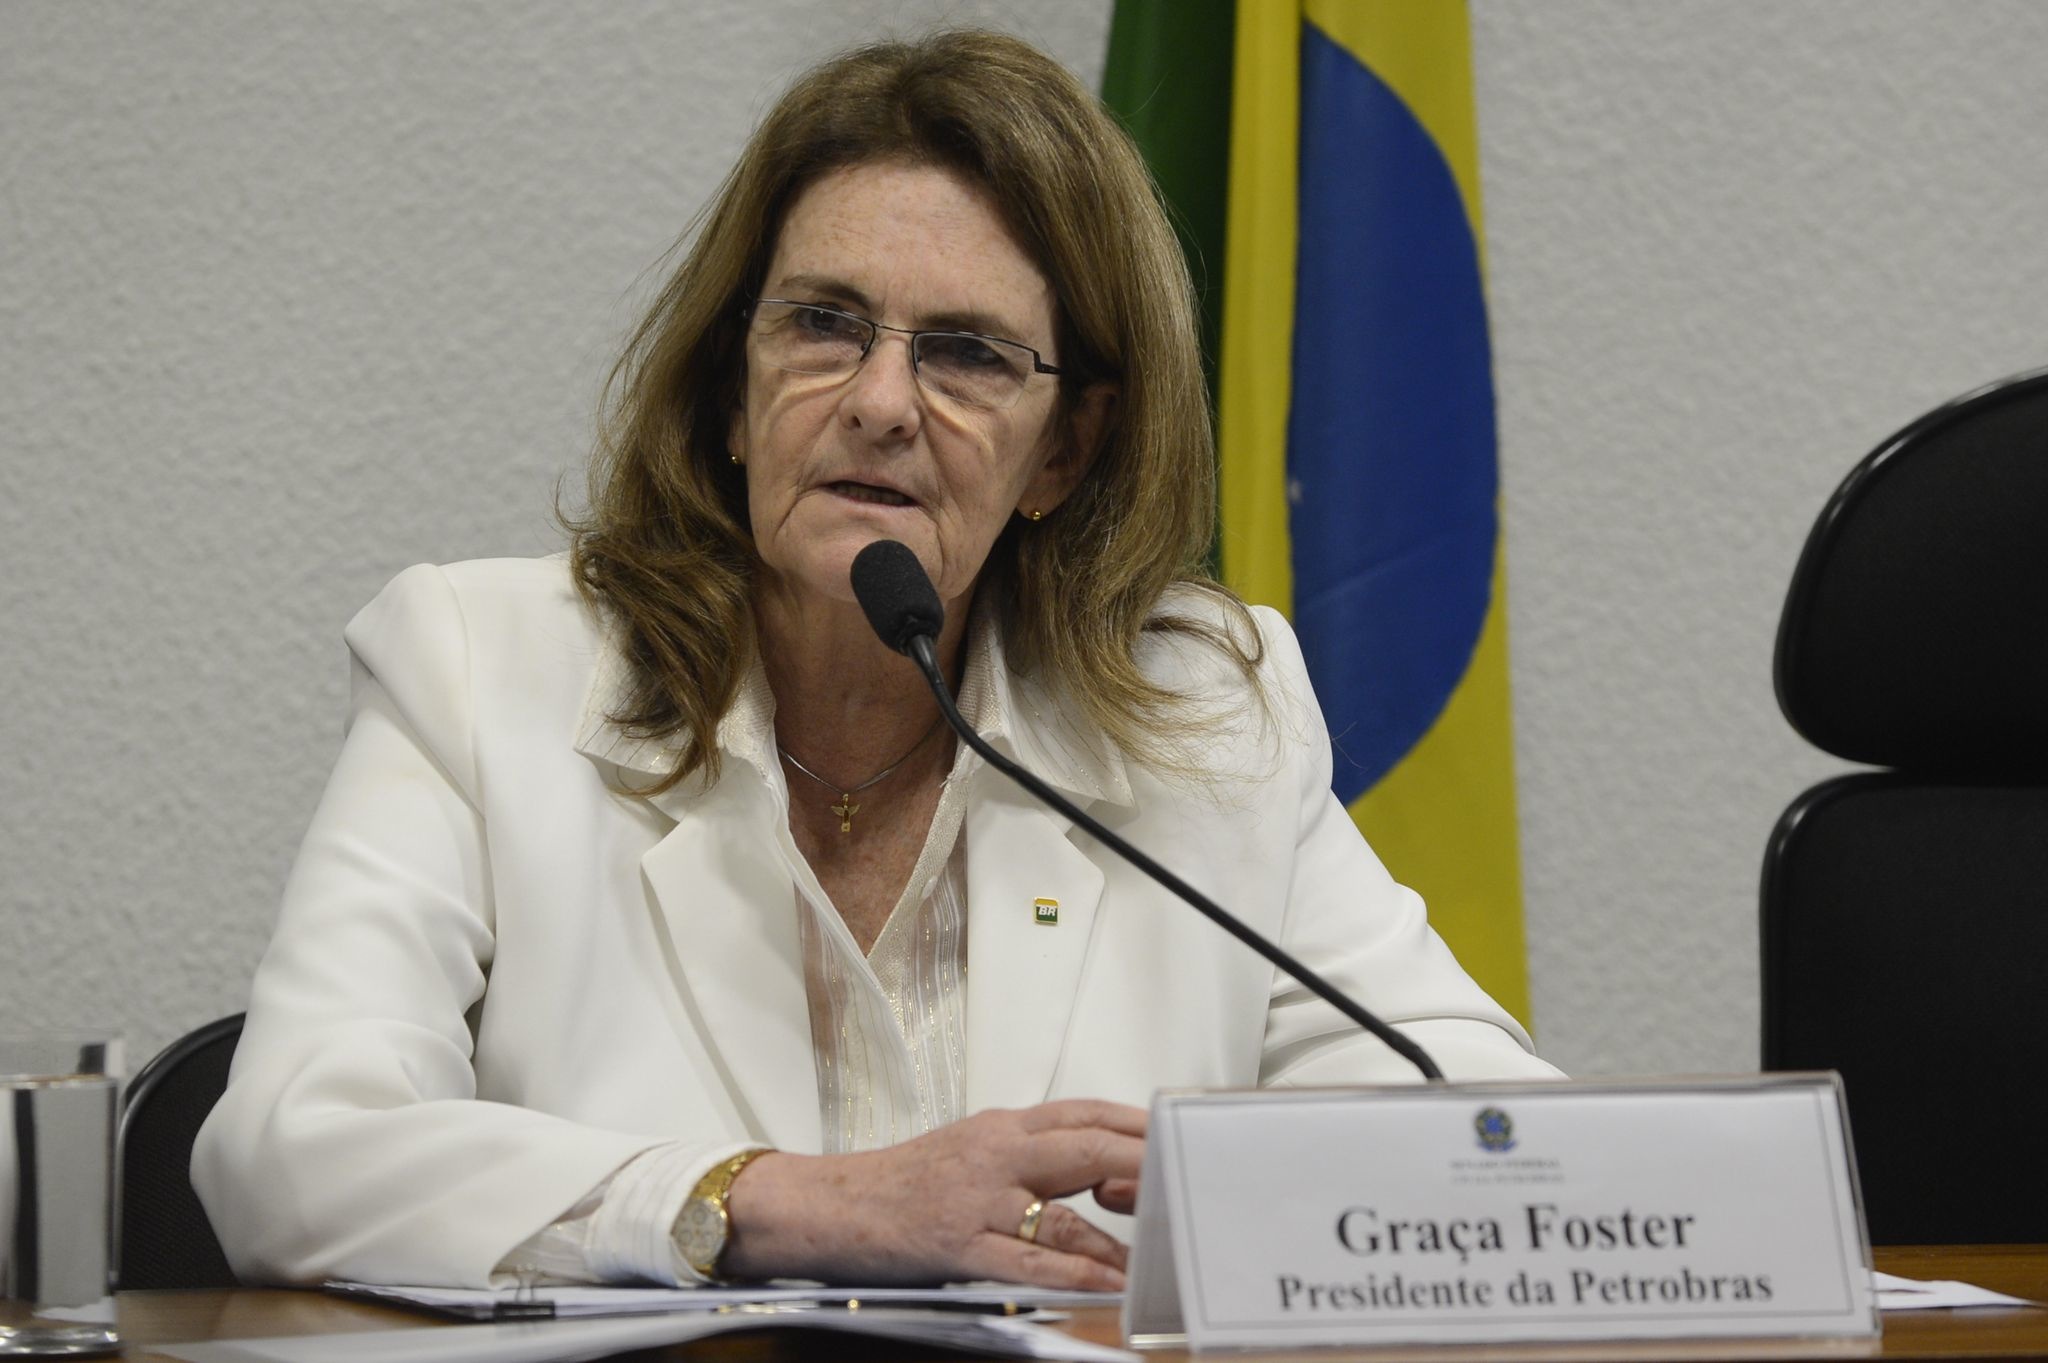 Petrobras CEO Graça Foster